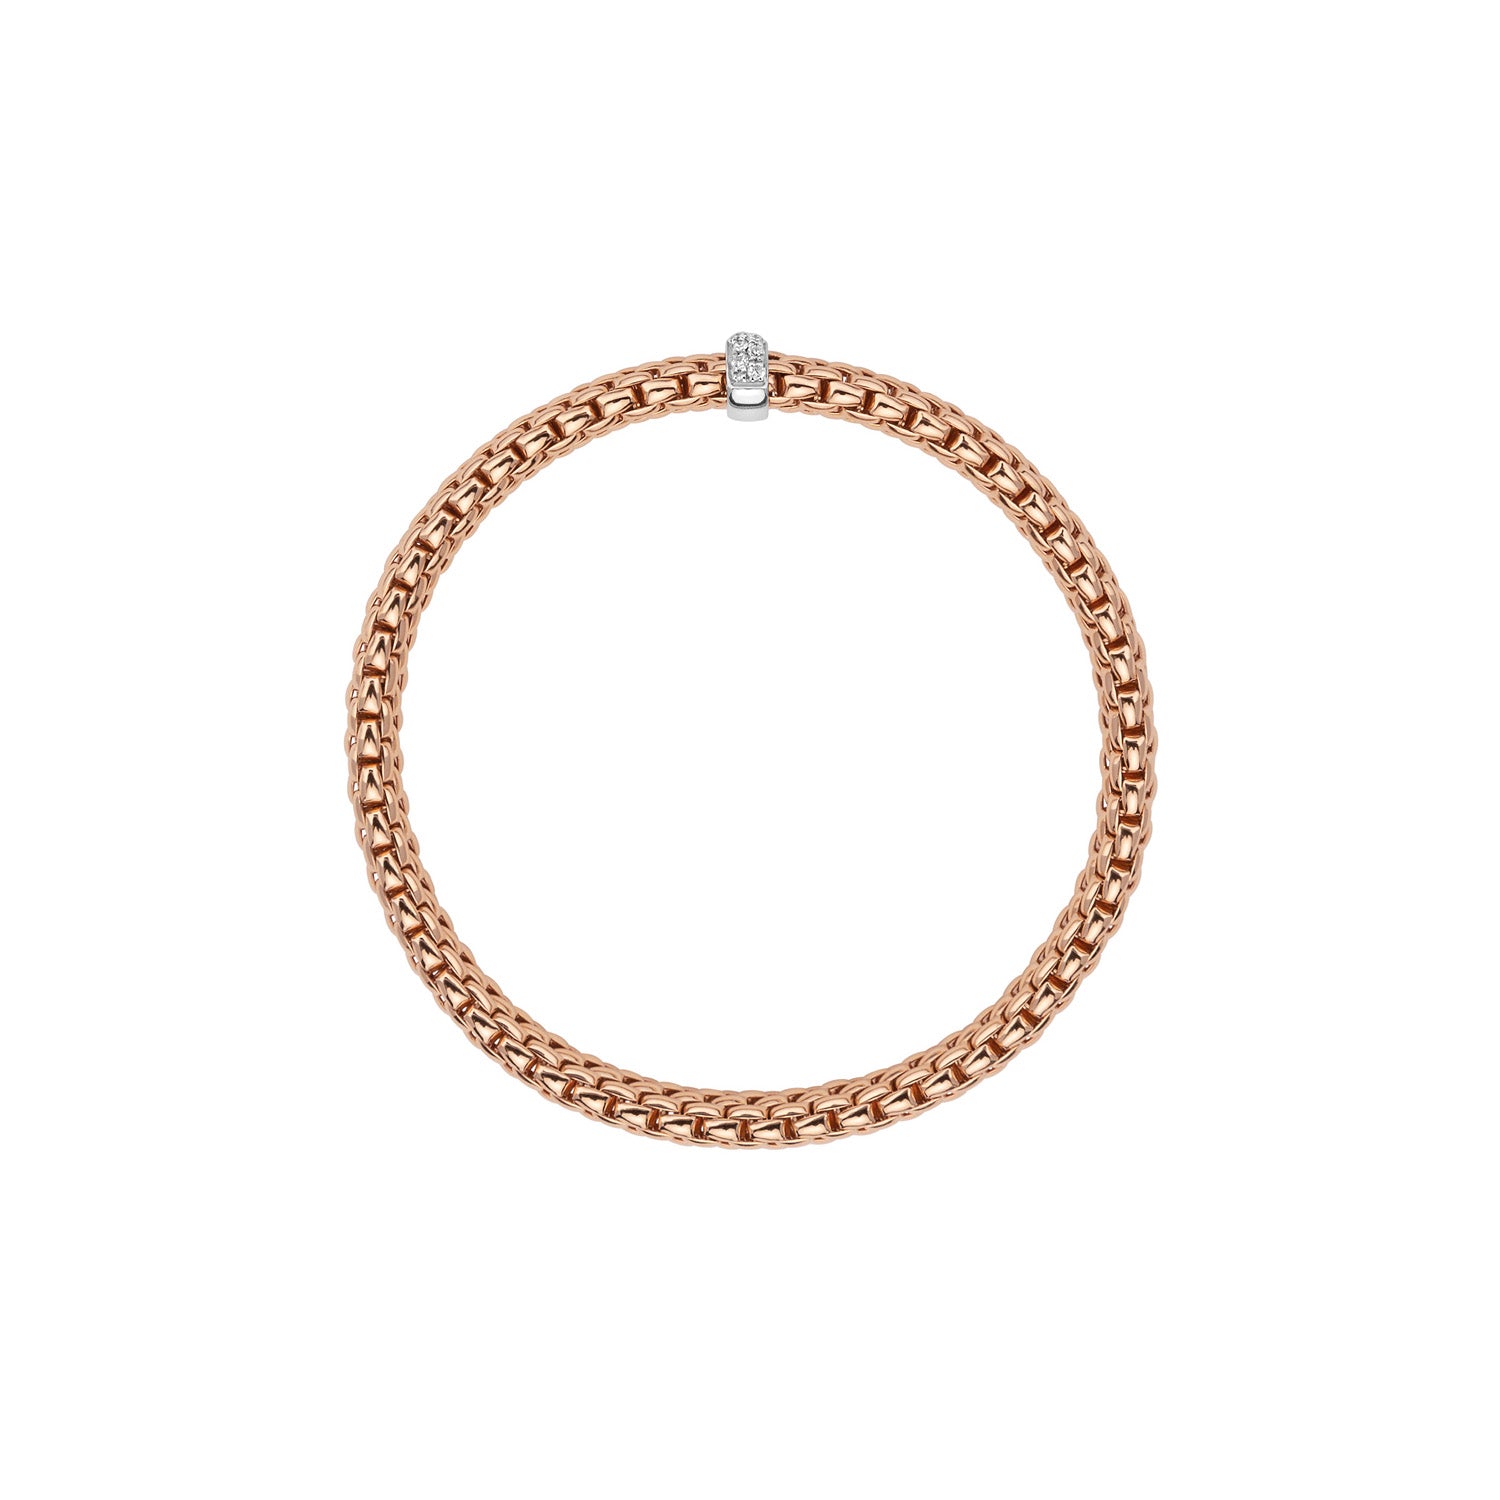 Flex'it Vendome bracelet with diamonds in Rose Gold